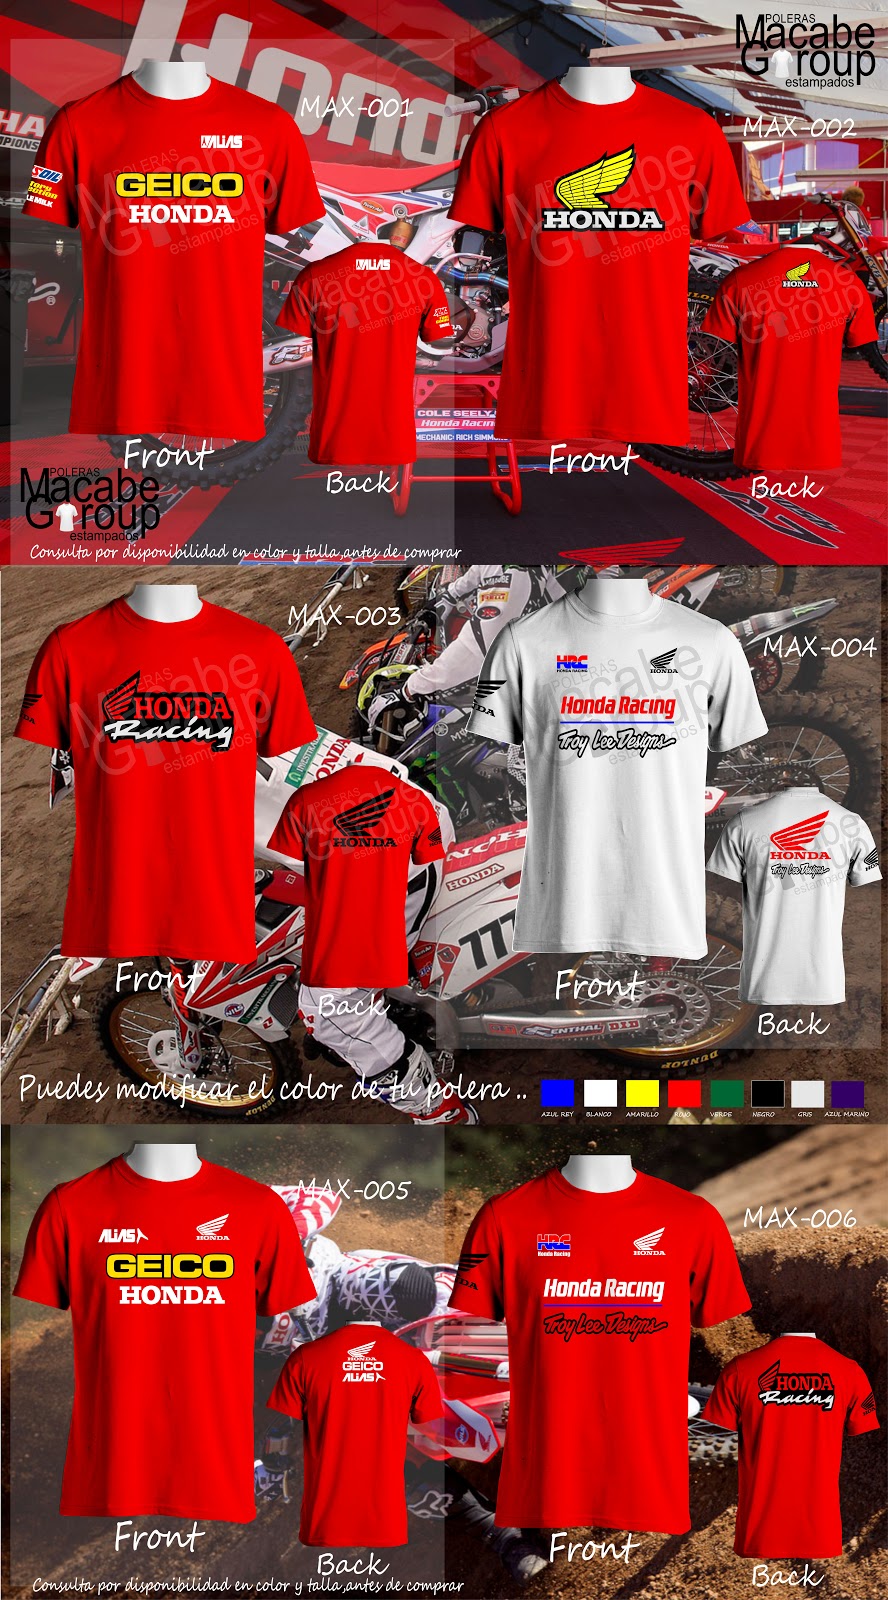 MACABEGROUP : Motocross Supercross Honda Yamaha